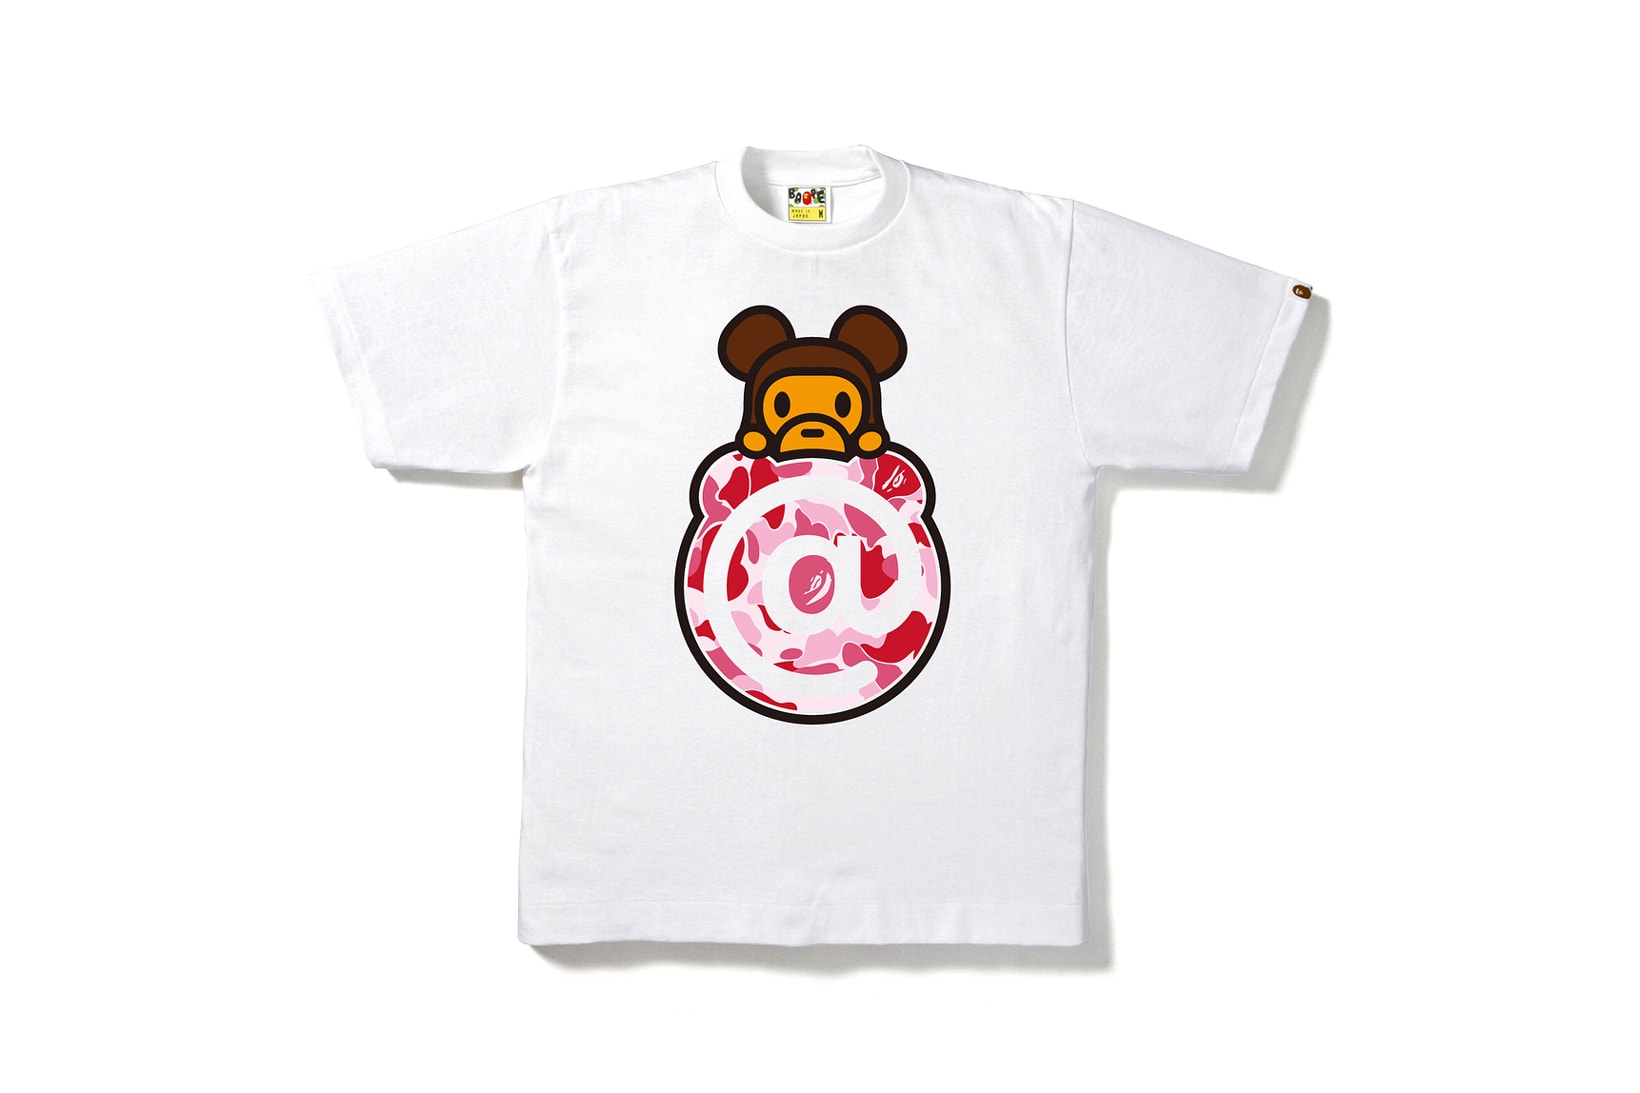 Medicom Toy BAPE A Bathing Ape Apparel Tshirts Clothing Streetwear Collaboration Camo Baby Milo